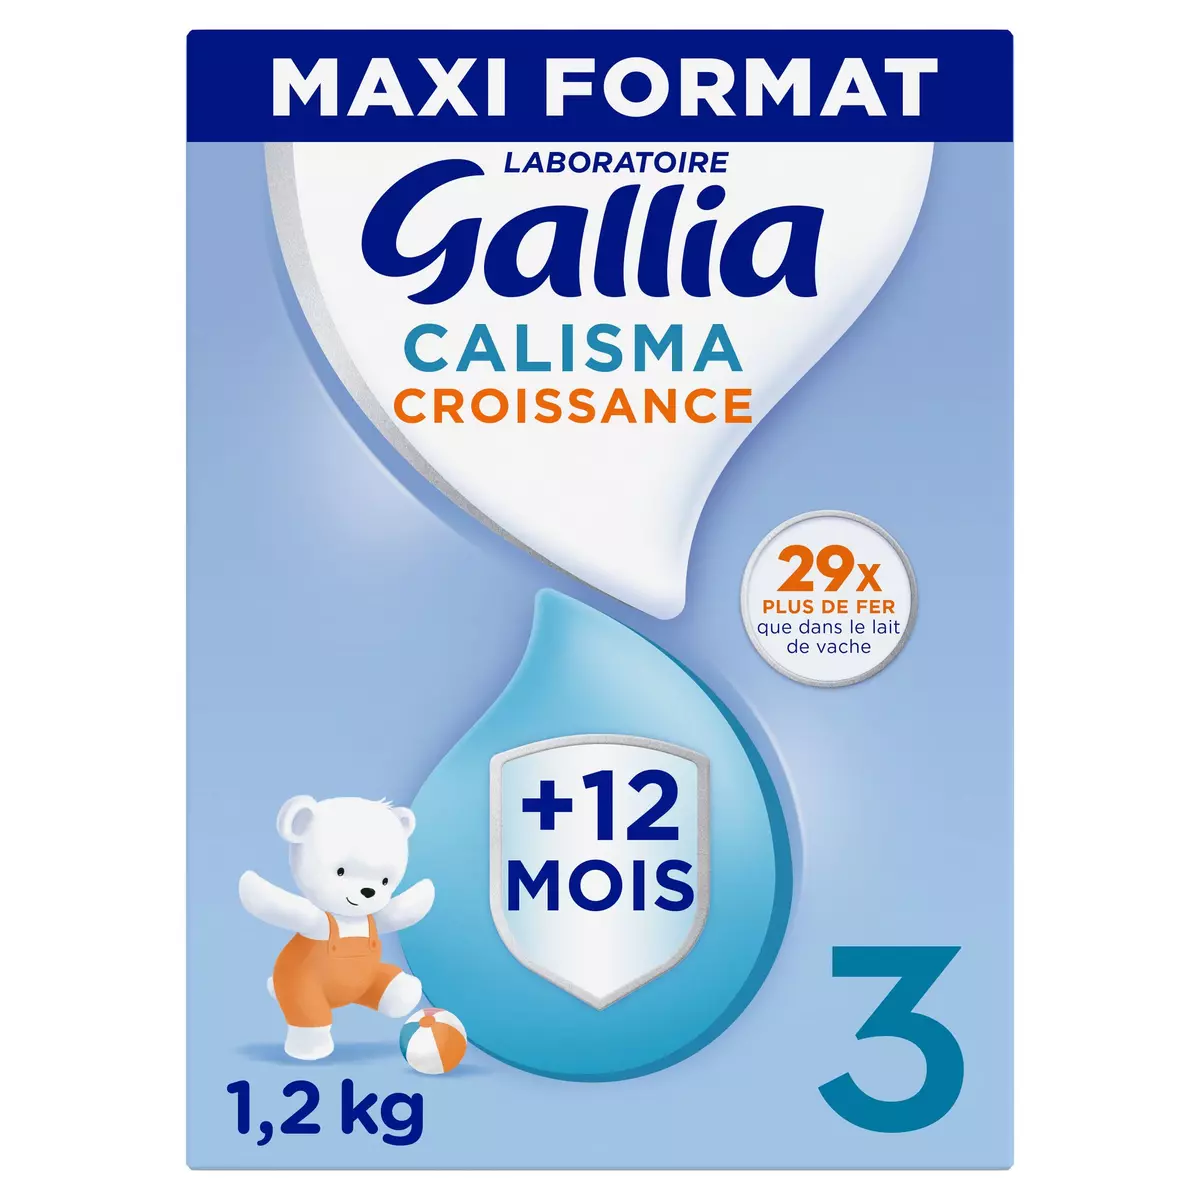 Gallia calisma croissance 3 - Gallia